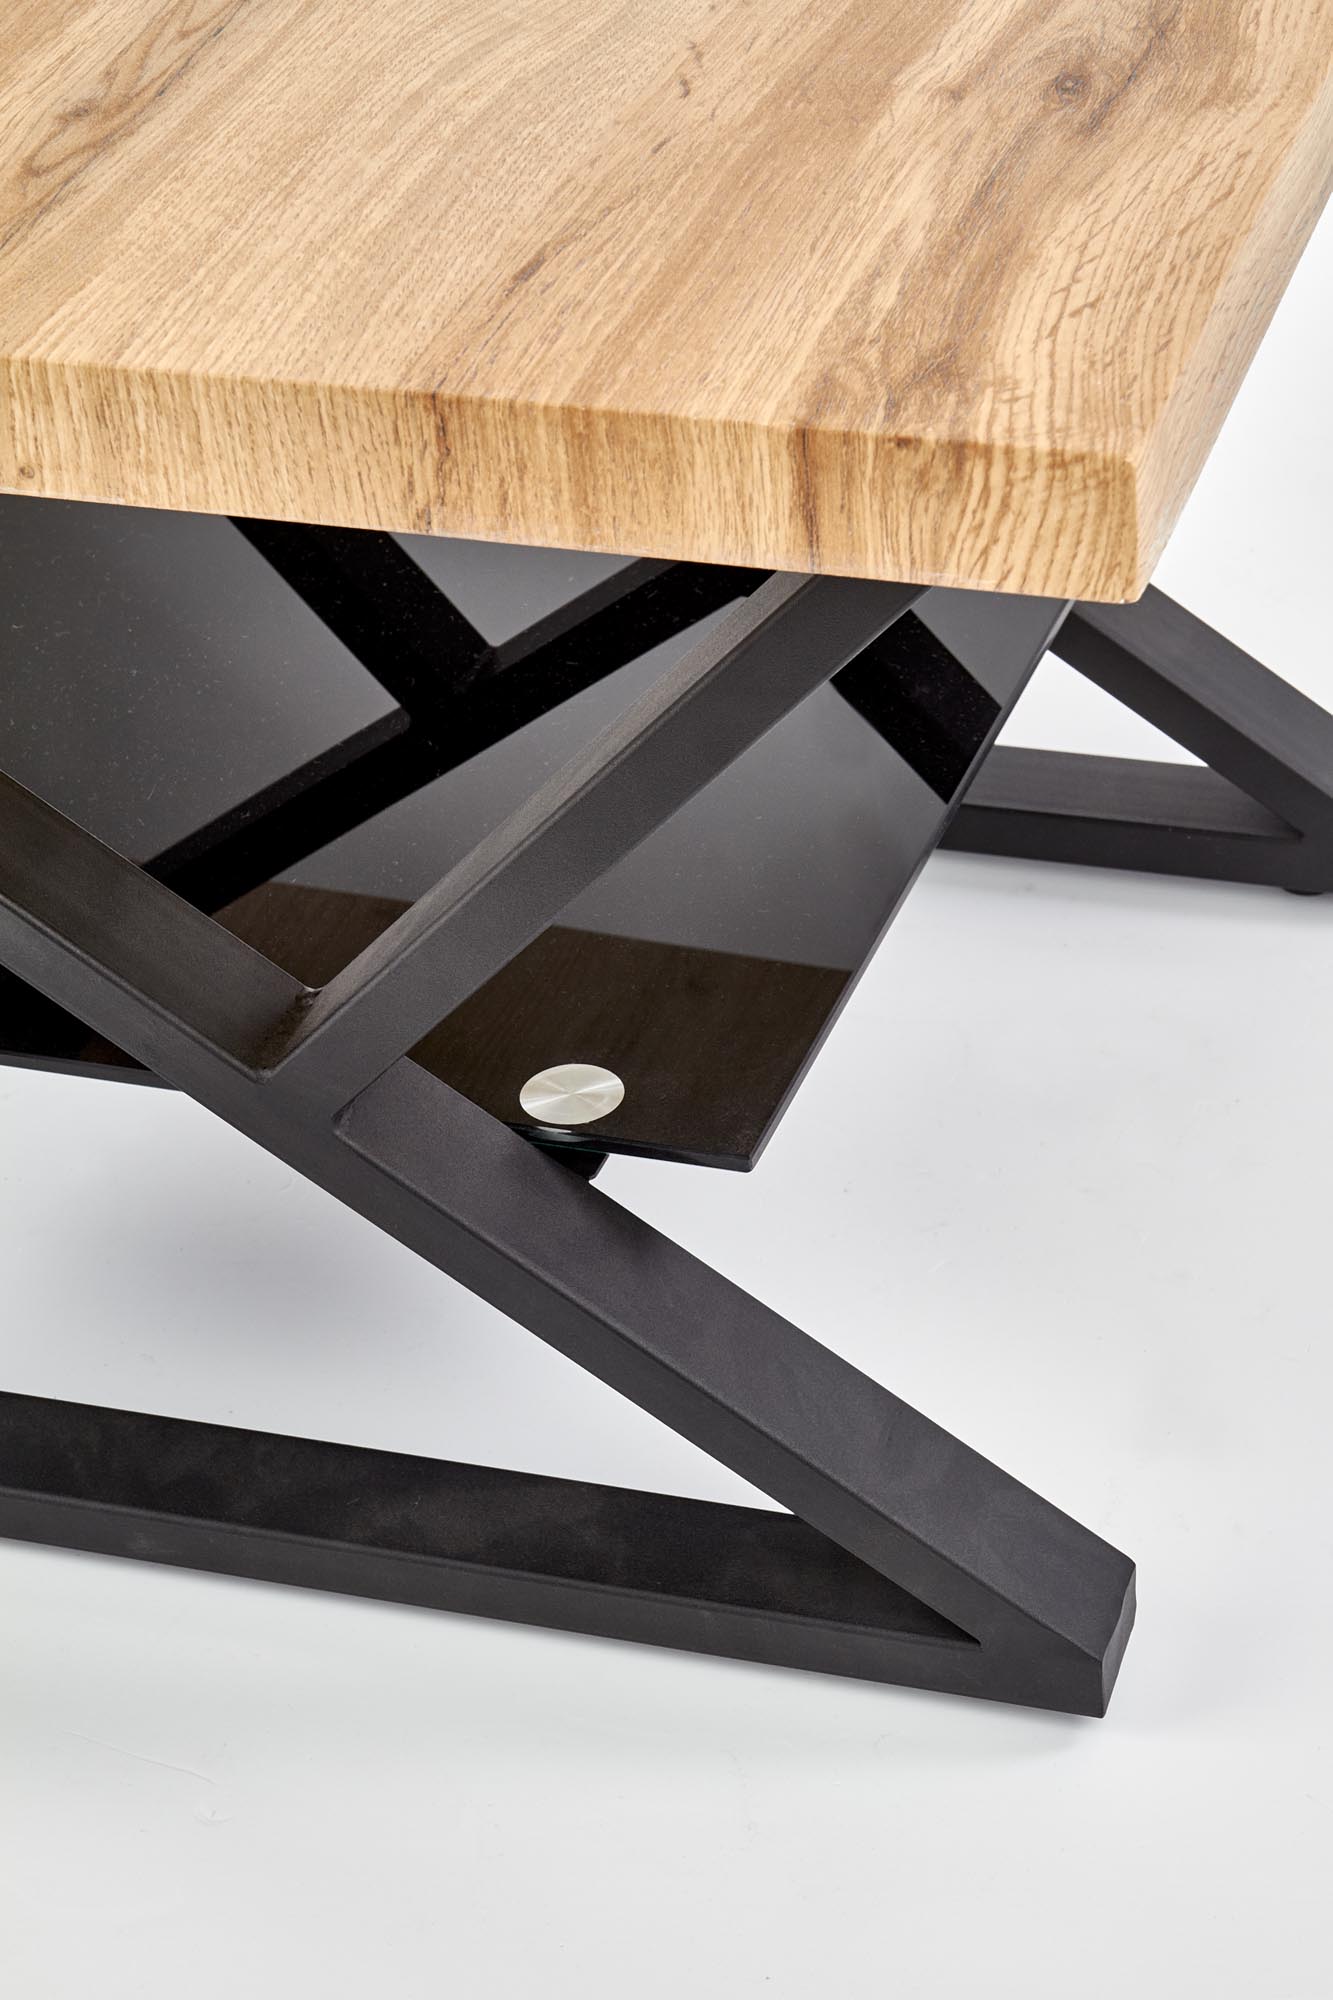 XENA KWADRAT dohányzóasztal - fekete / natúr xena Čtverec Konferenční stolek Fekete / přírodní